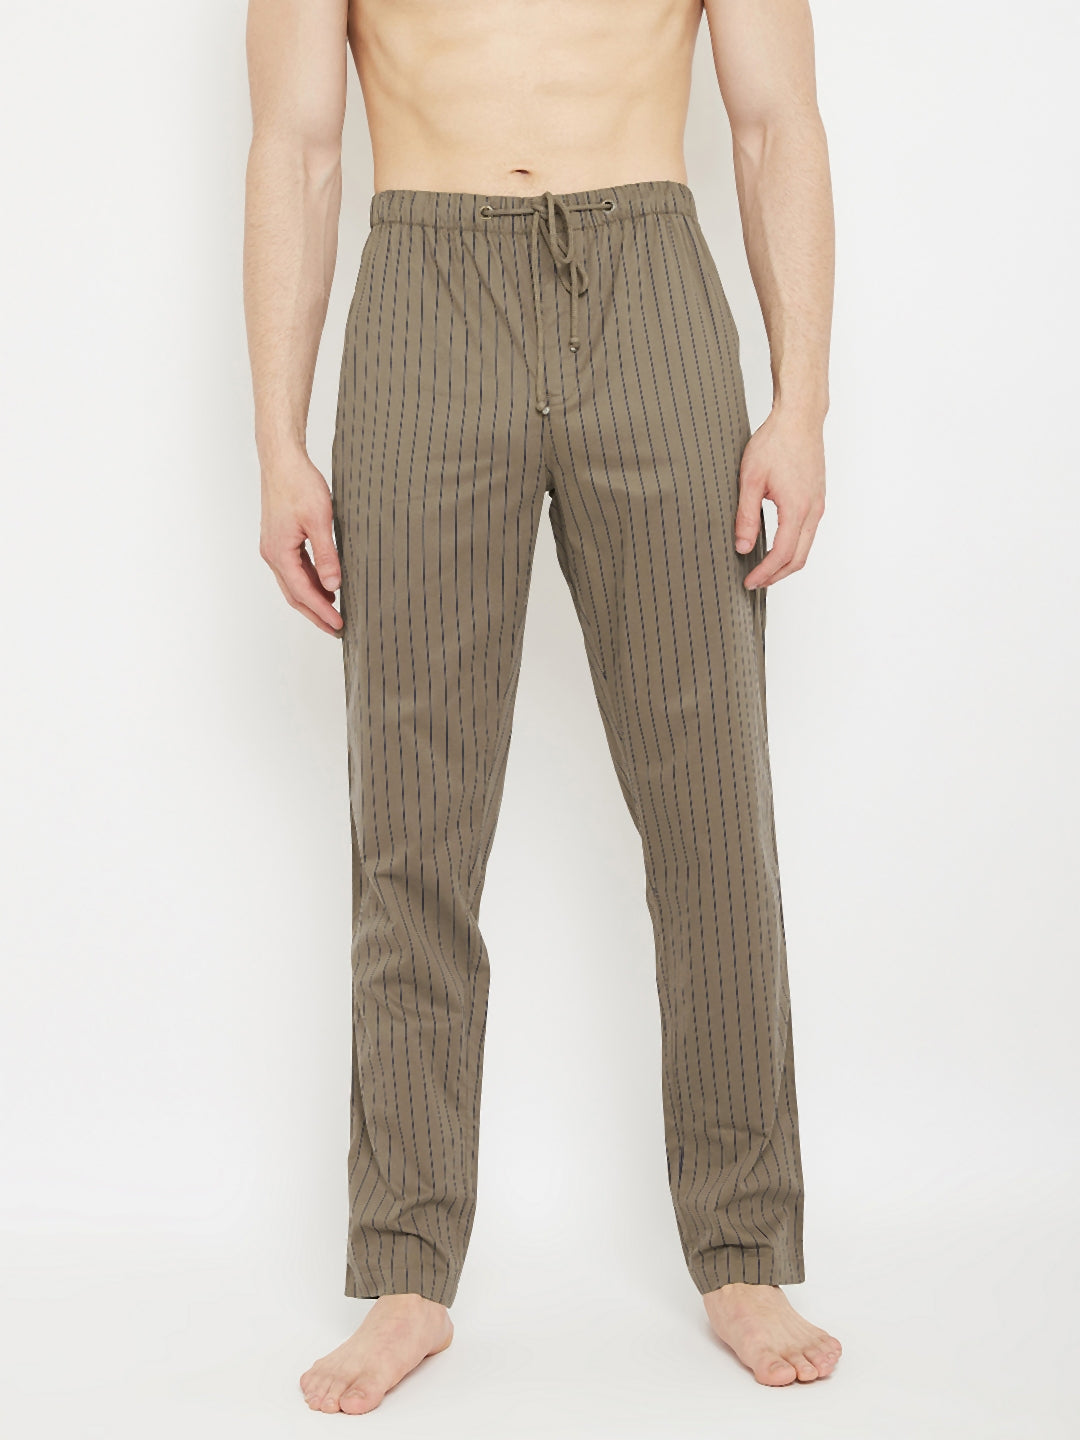 Brown Striped Straight Lounge Pants - Men Lounge Pants